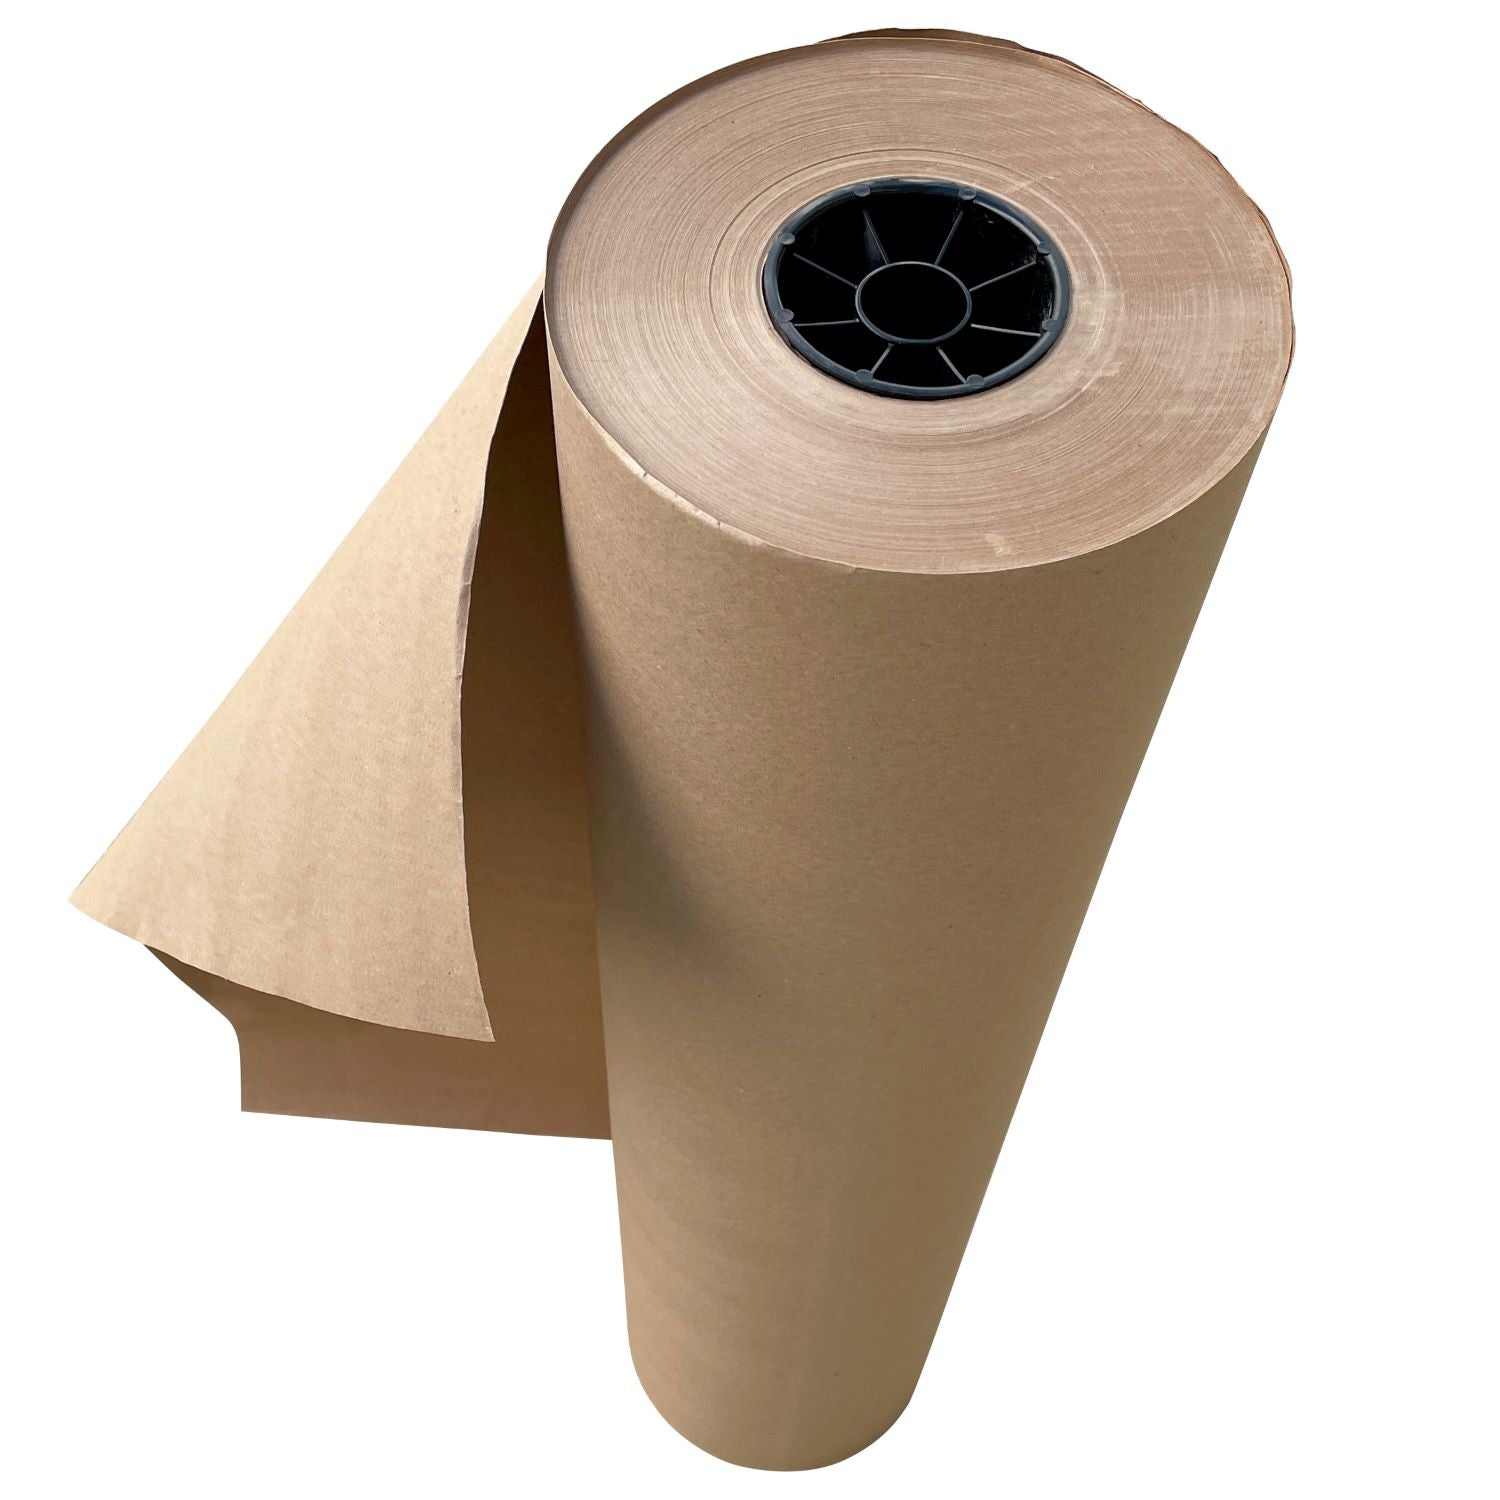 Kraft Paper Rolls, 6 Wide - 30 lb.